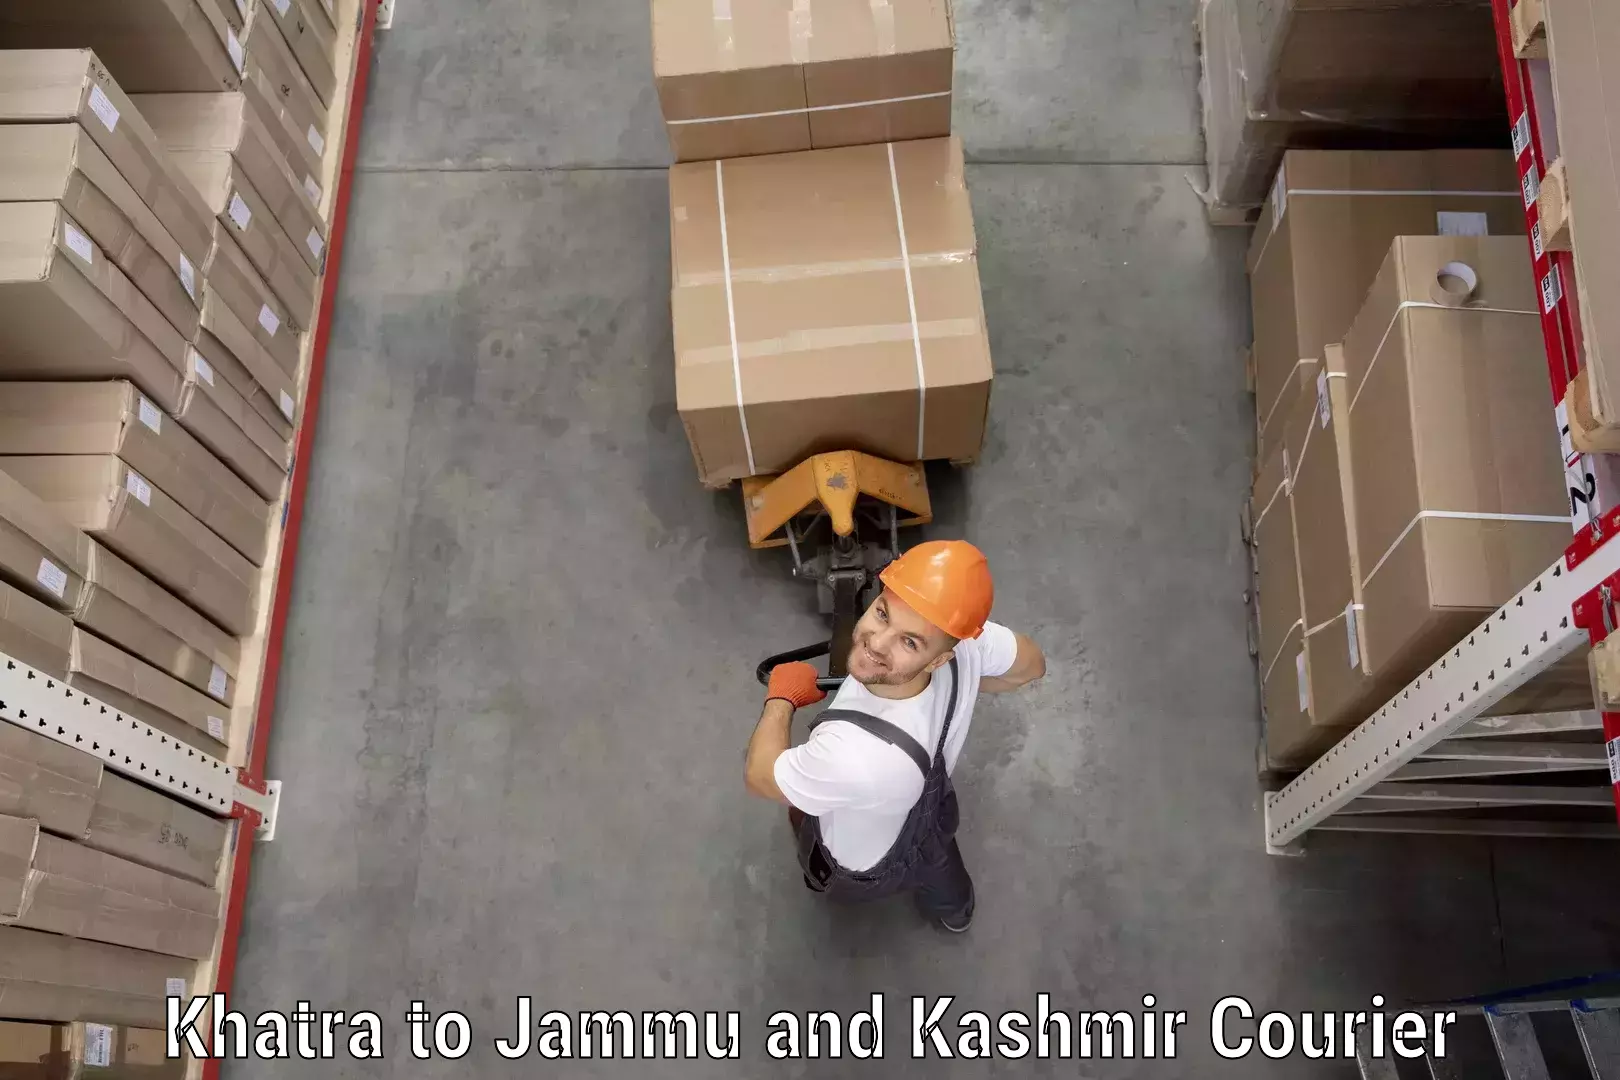 24-hour courier services in Khatra to Srinagar Kashmir